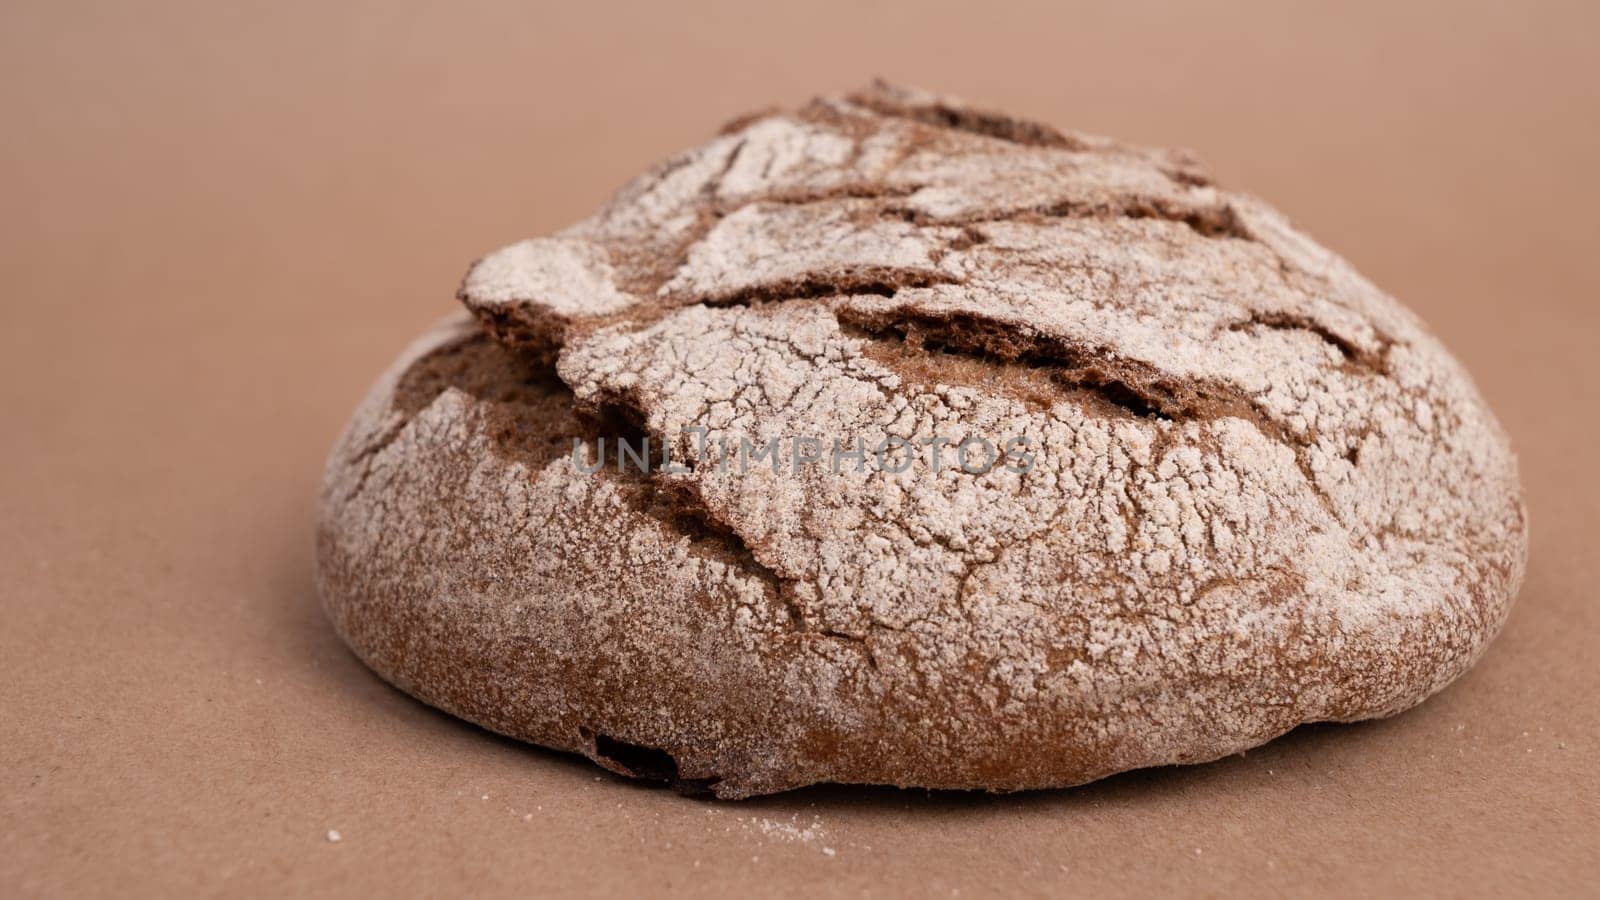 freshly baked bread on Brown craft paper